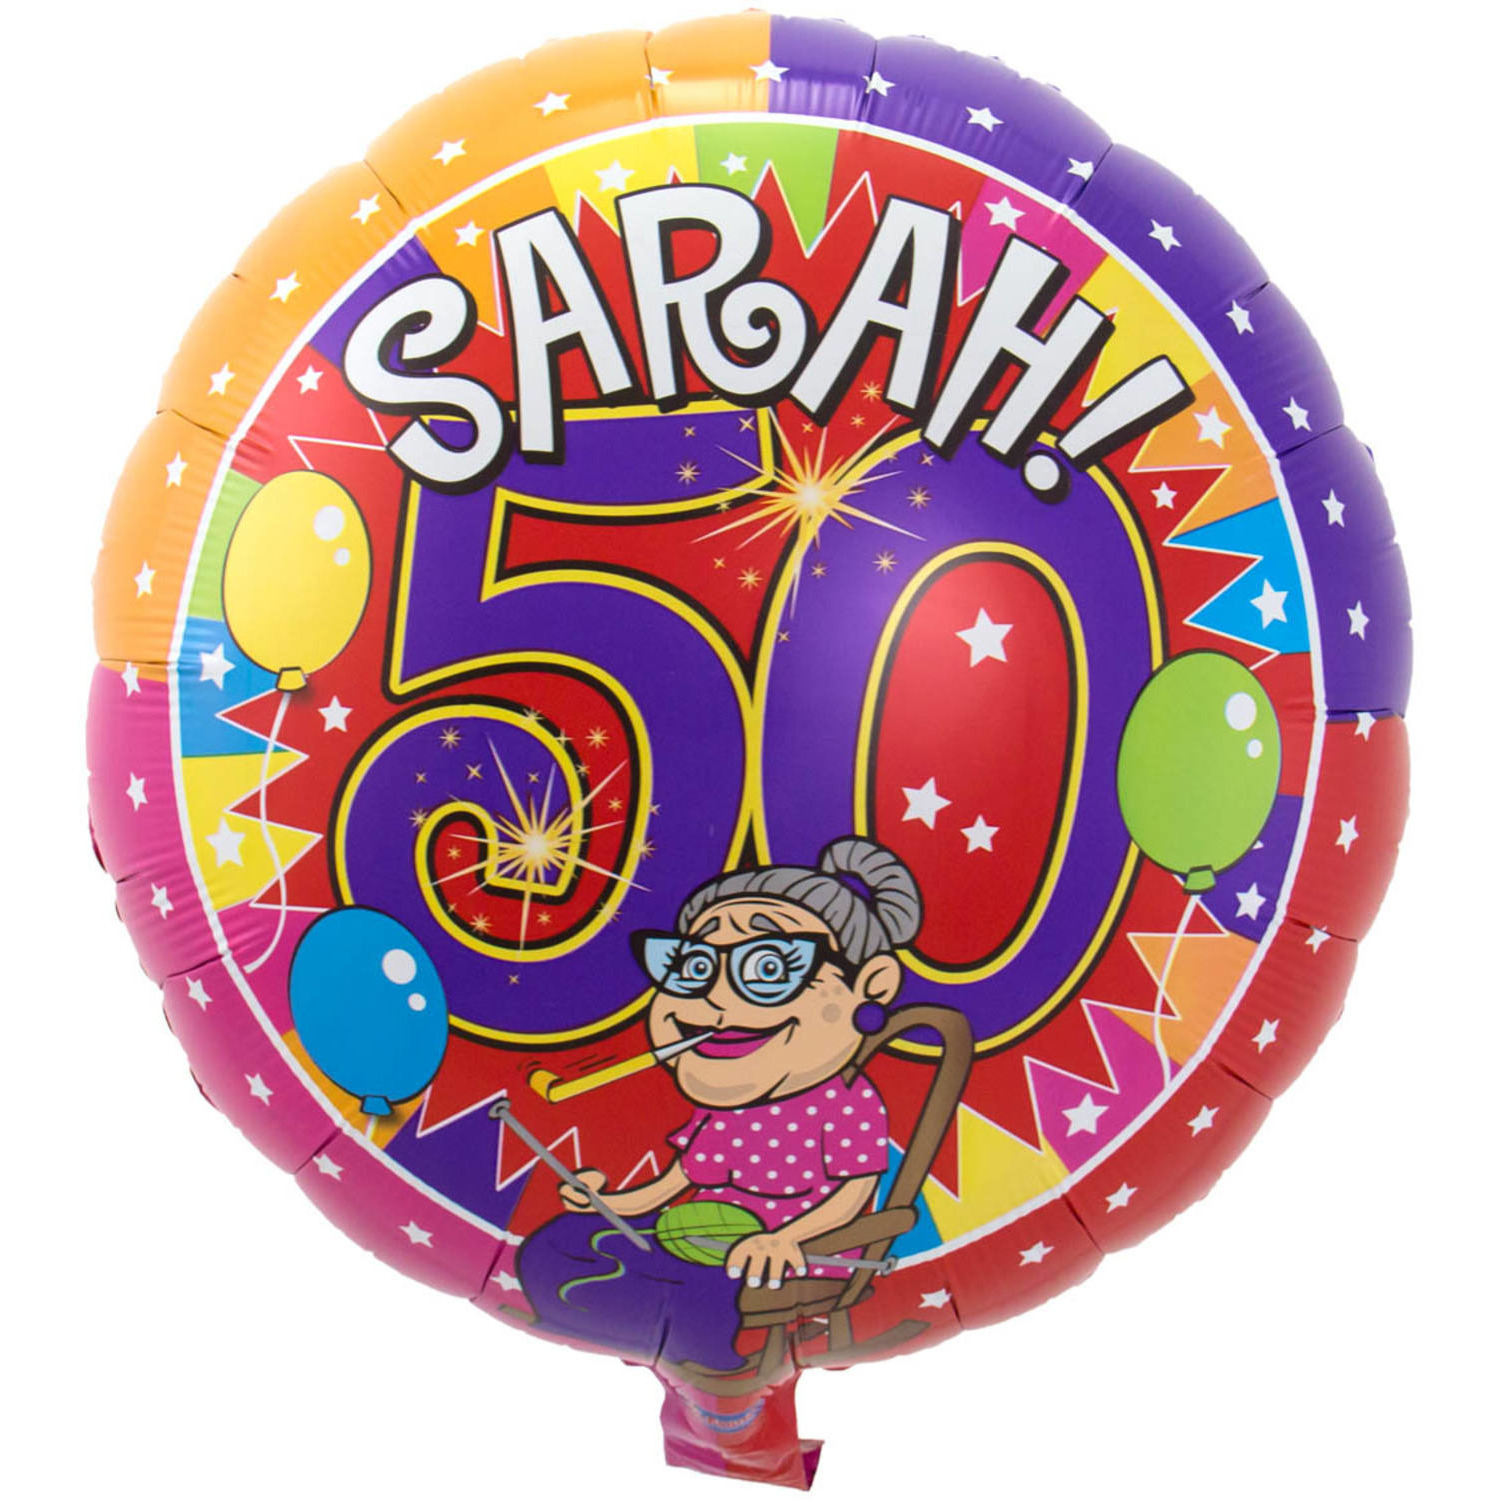 Folie ballon Sarah 50 jaar verjaardag 43 cm met helium gevuld